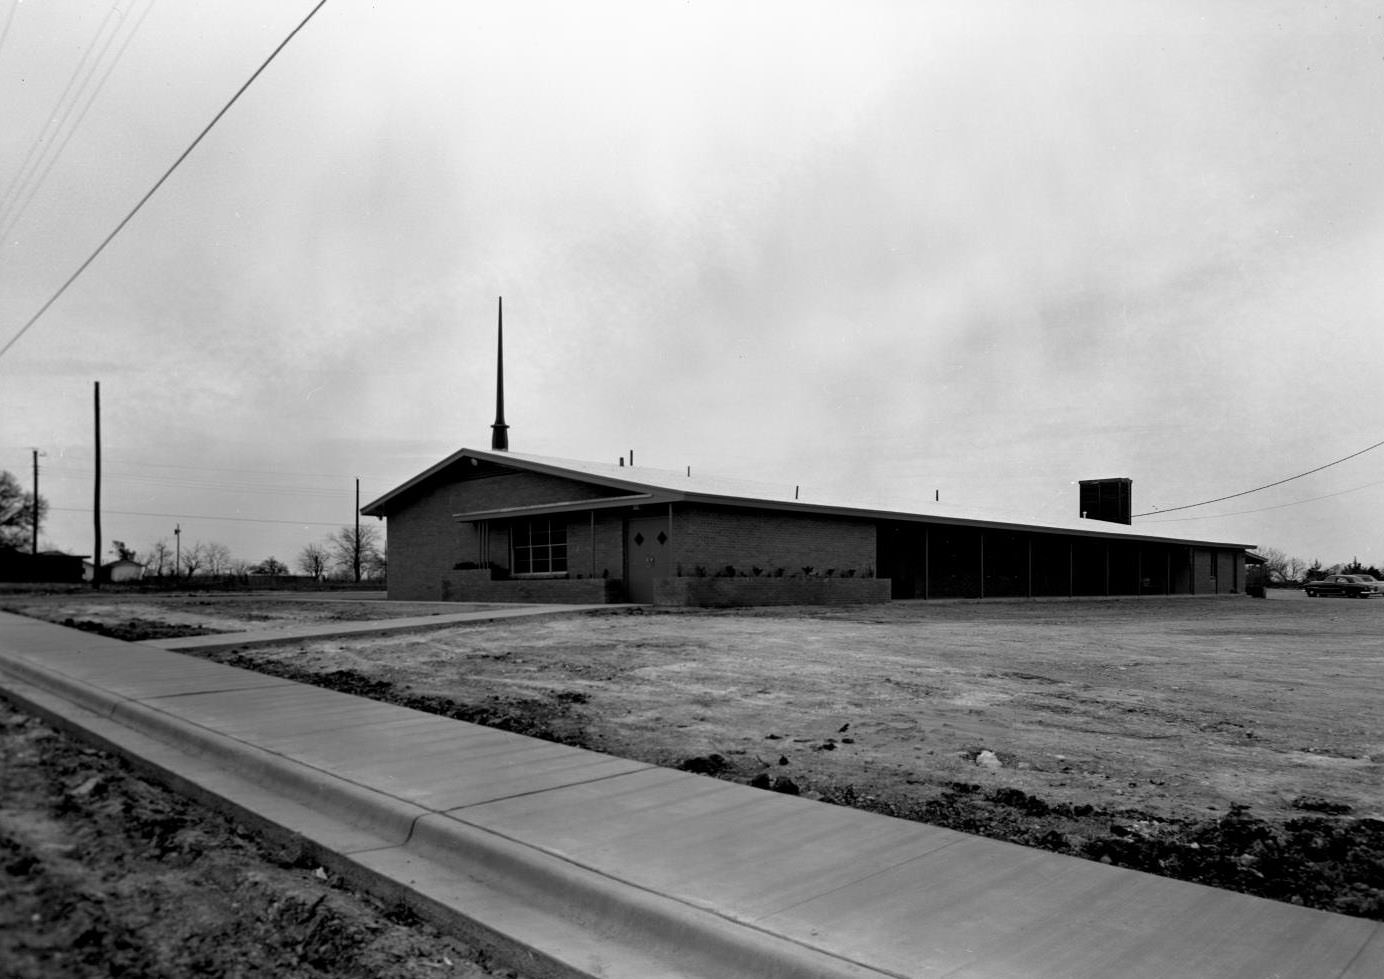 South Austin Baptist Church, Exterior View, 1957.